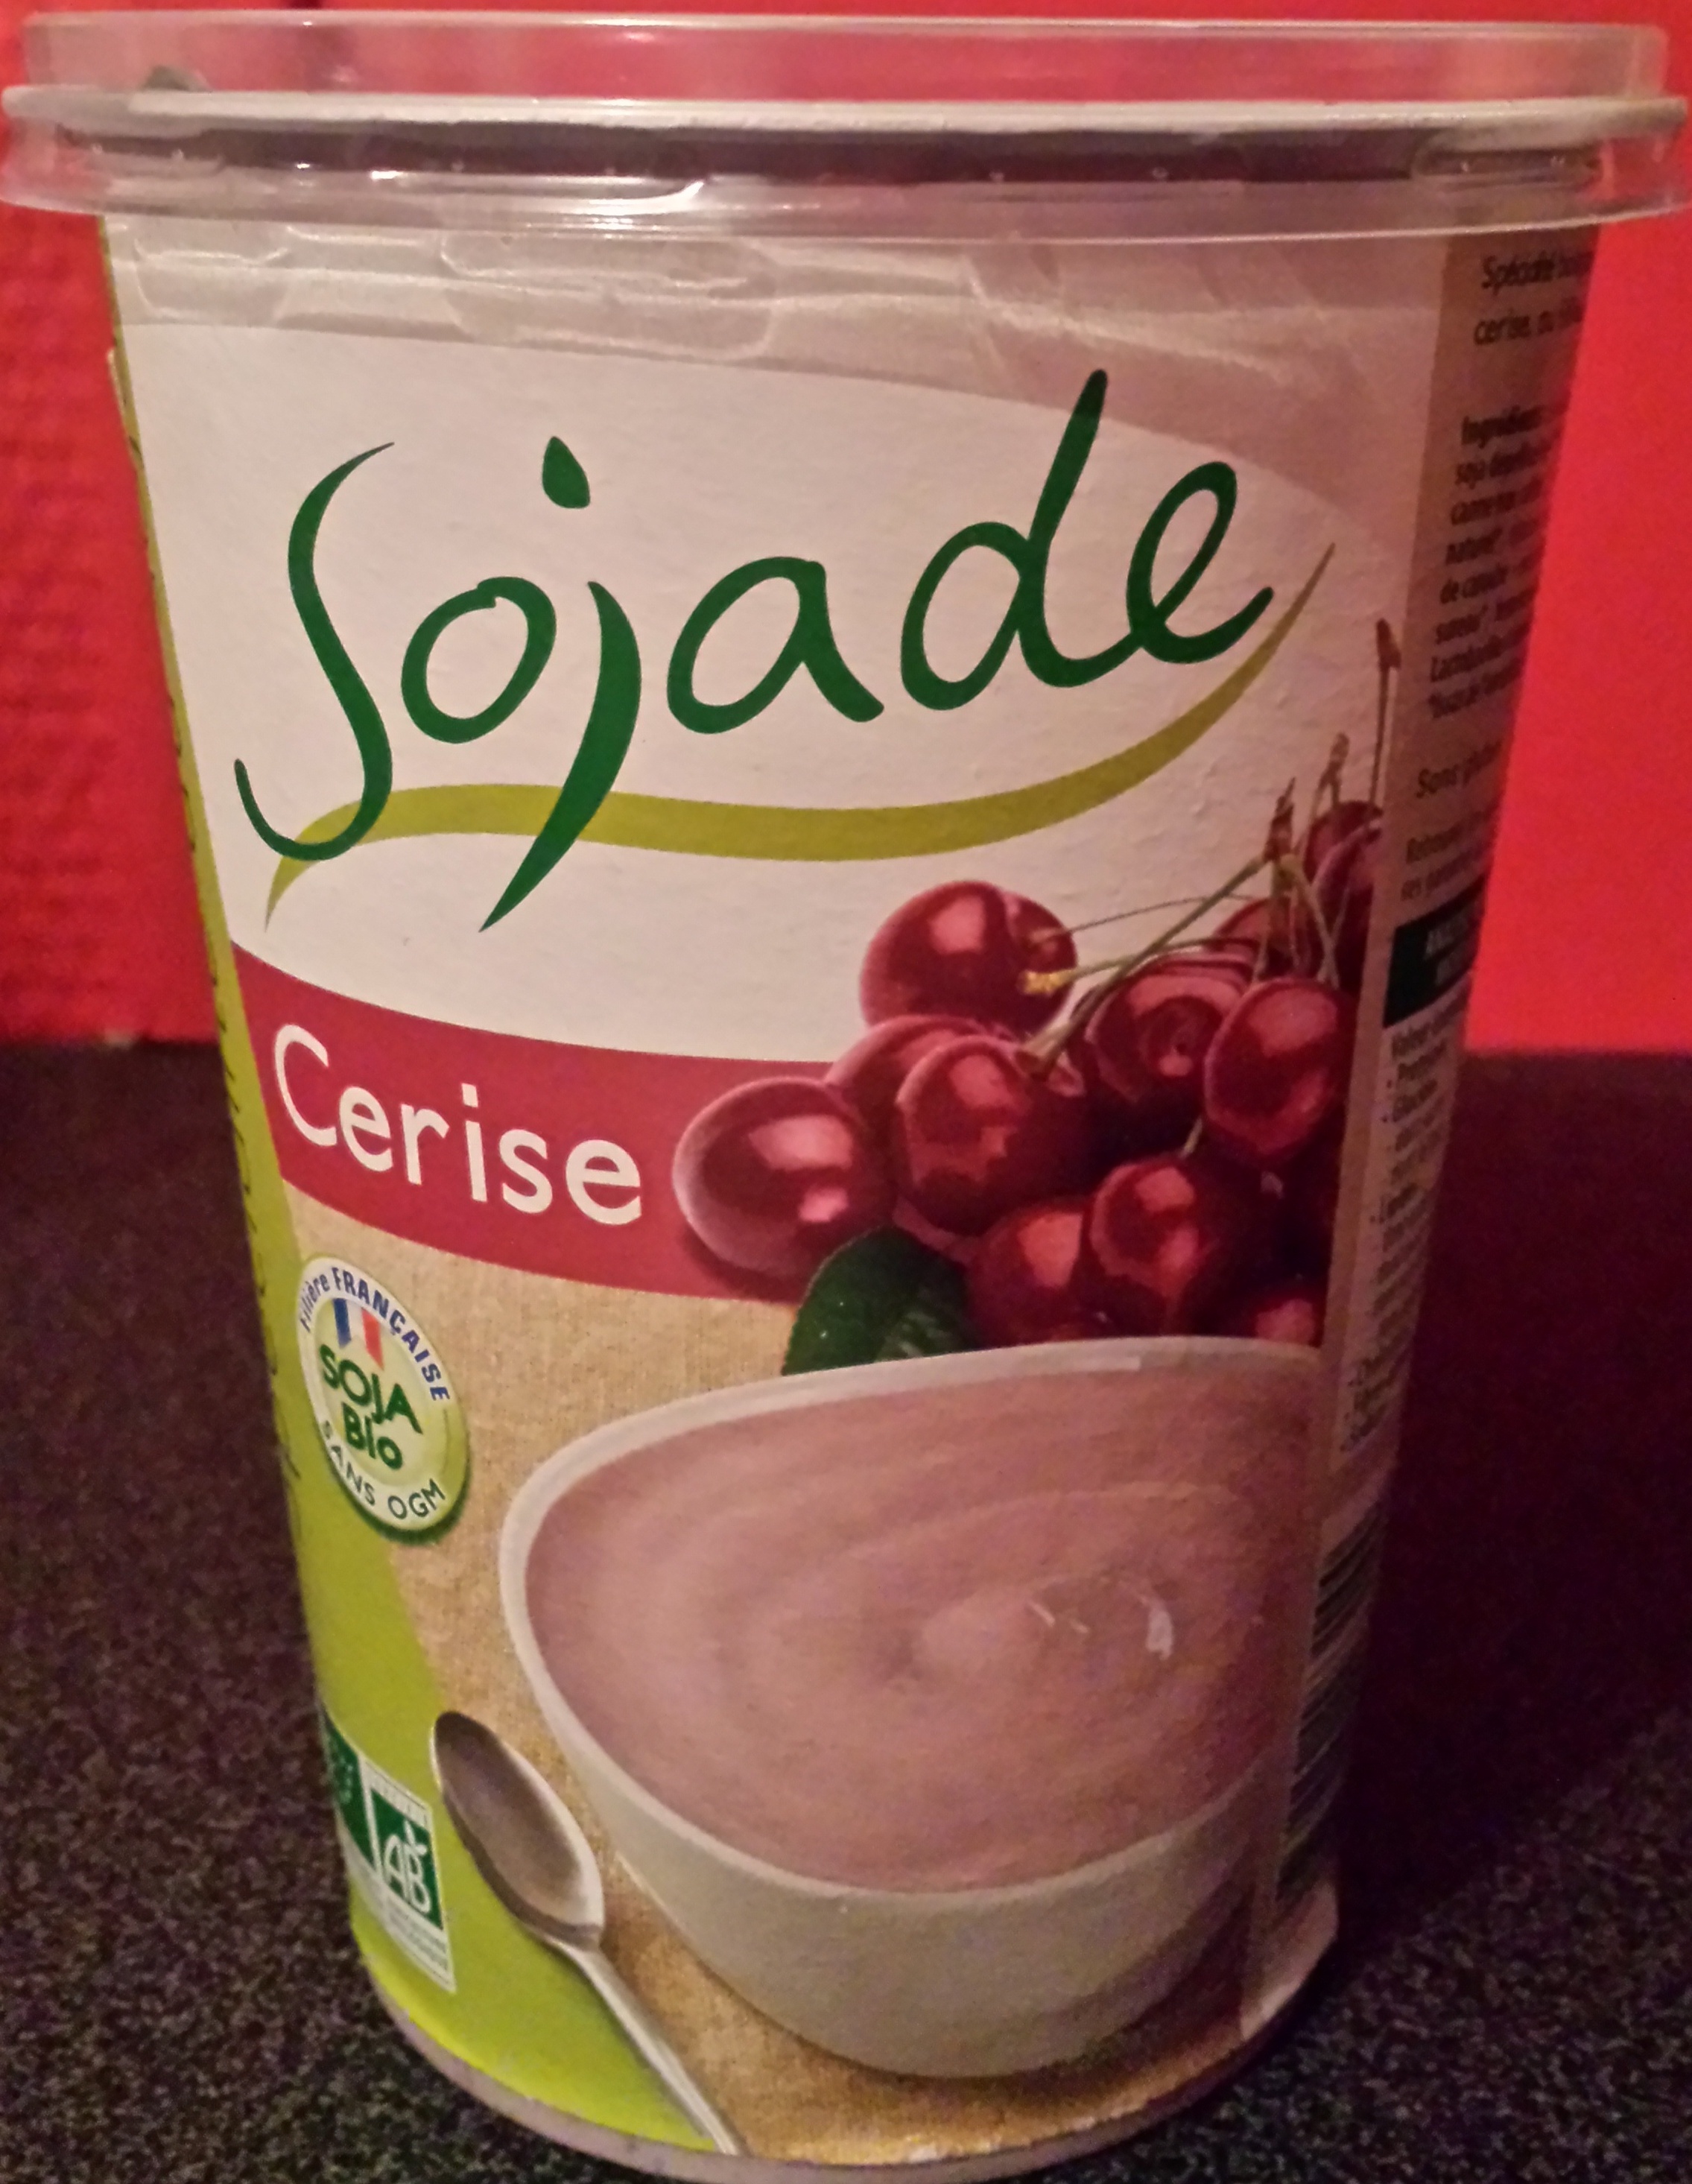 Spécialité au soja, Cerise - Product - fr